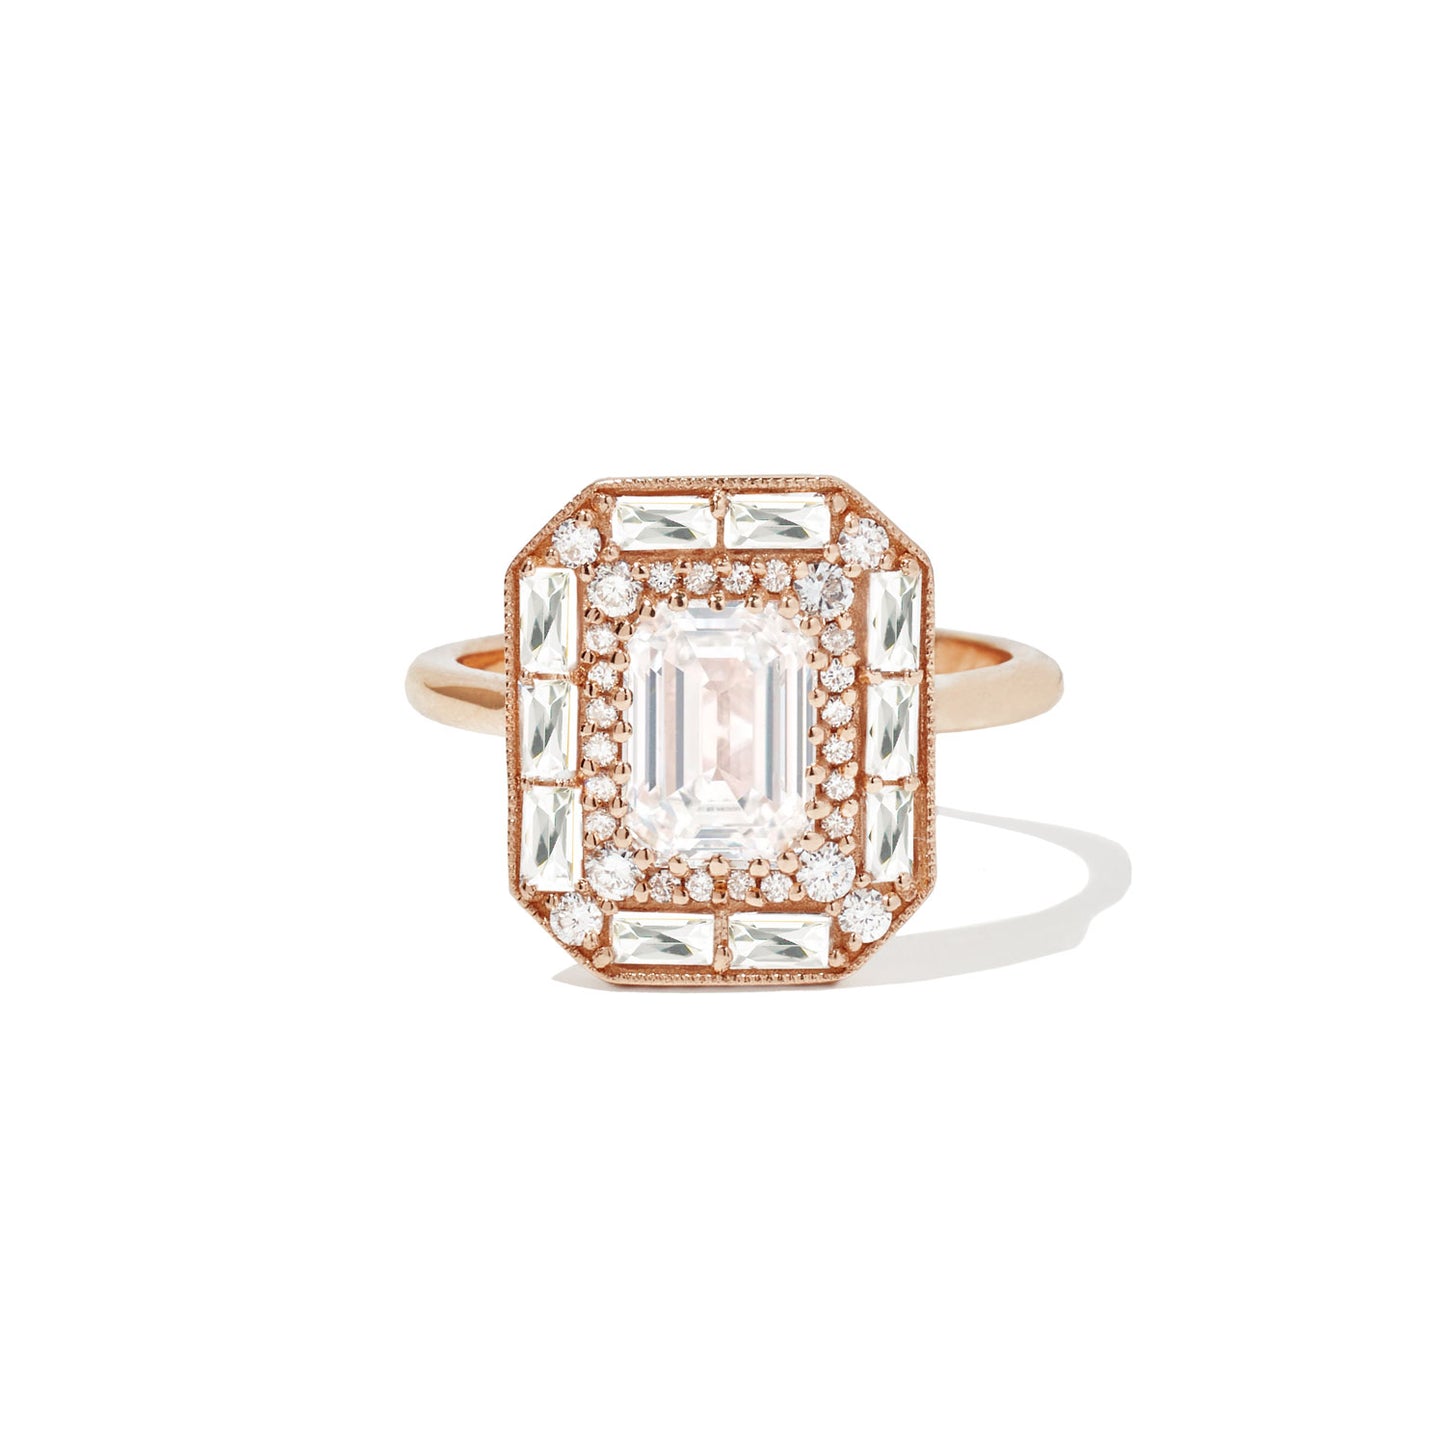 OOAK 5-Stone Emerald Cut Diamond Ring - SOLD – Vale Jewelry